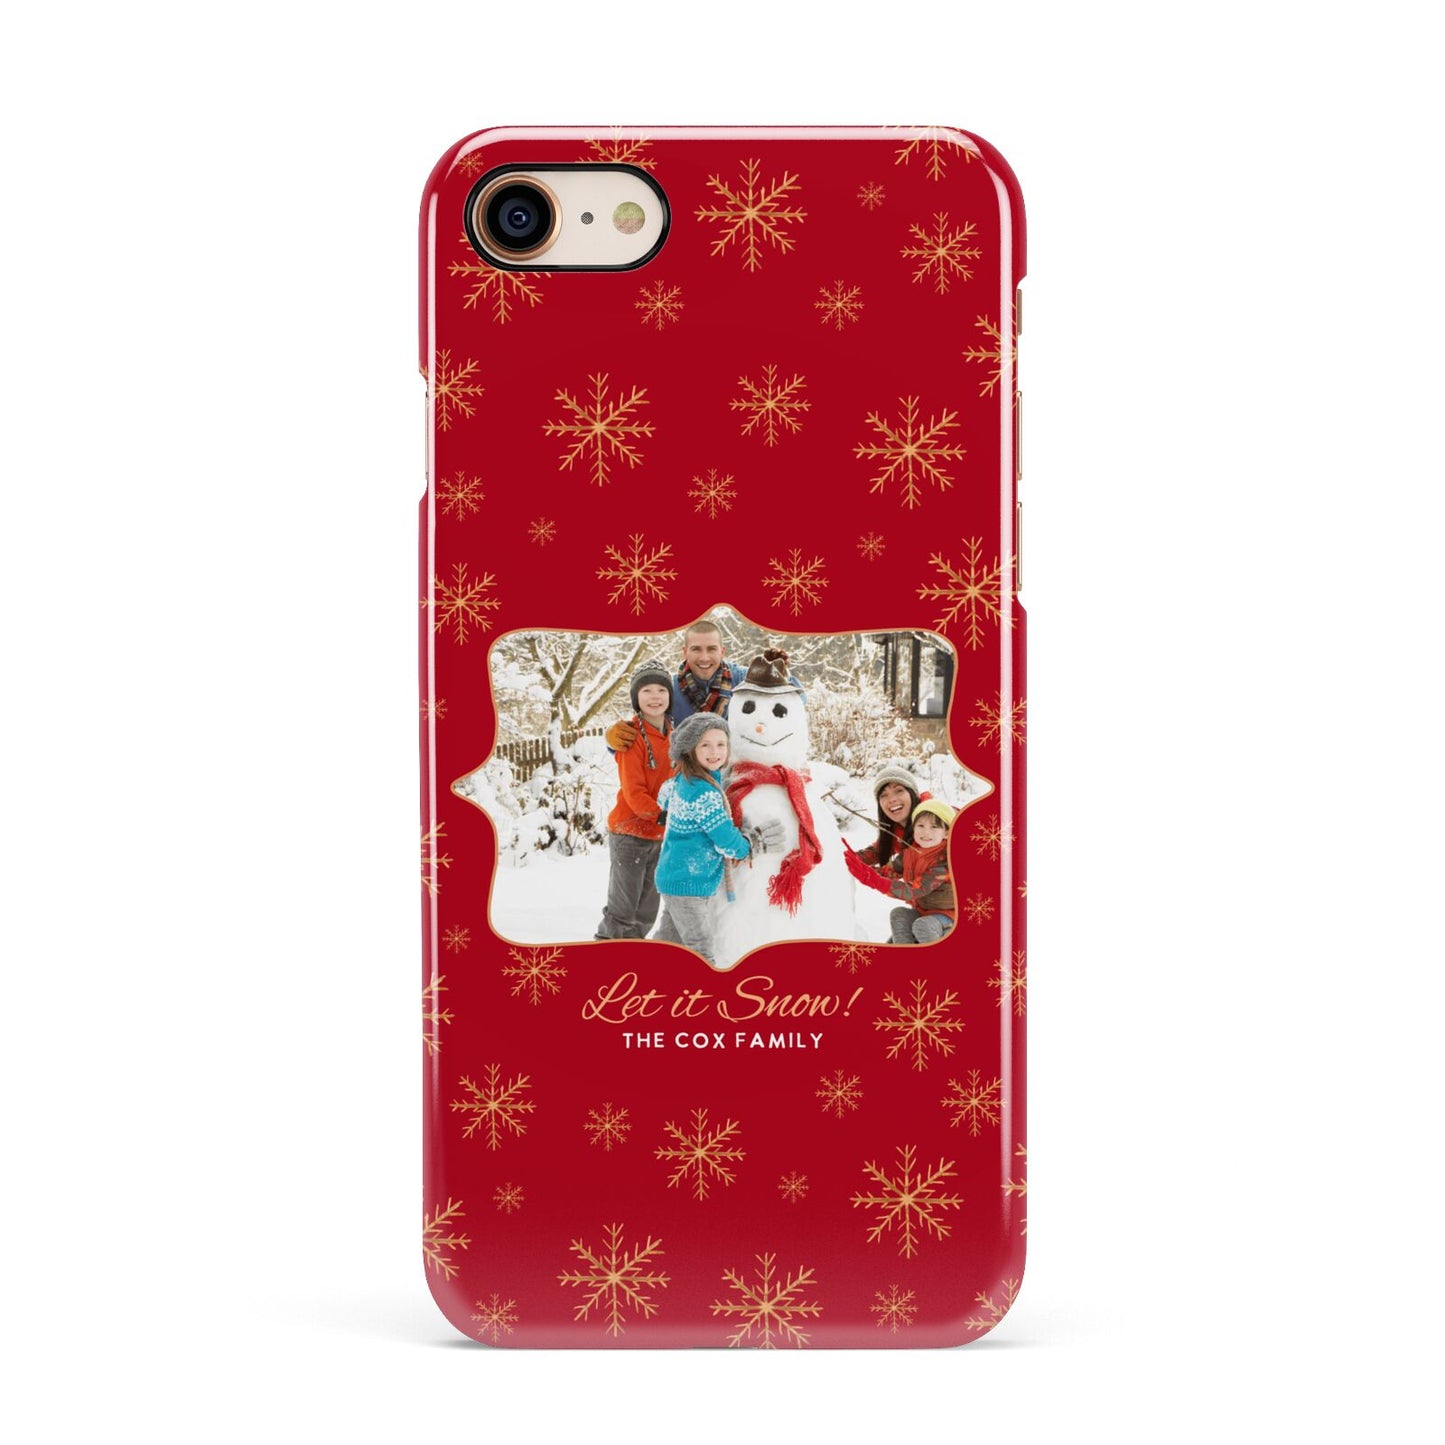 Let it Snow Christmas Photo Upload Apple iPhone 7 8 3D Snap Case